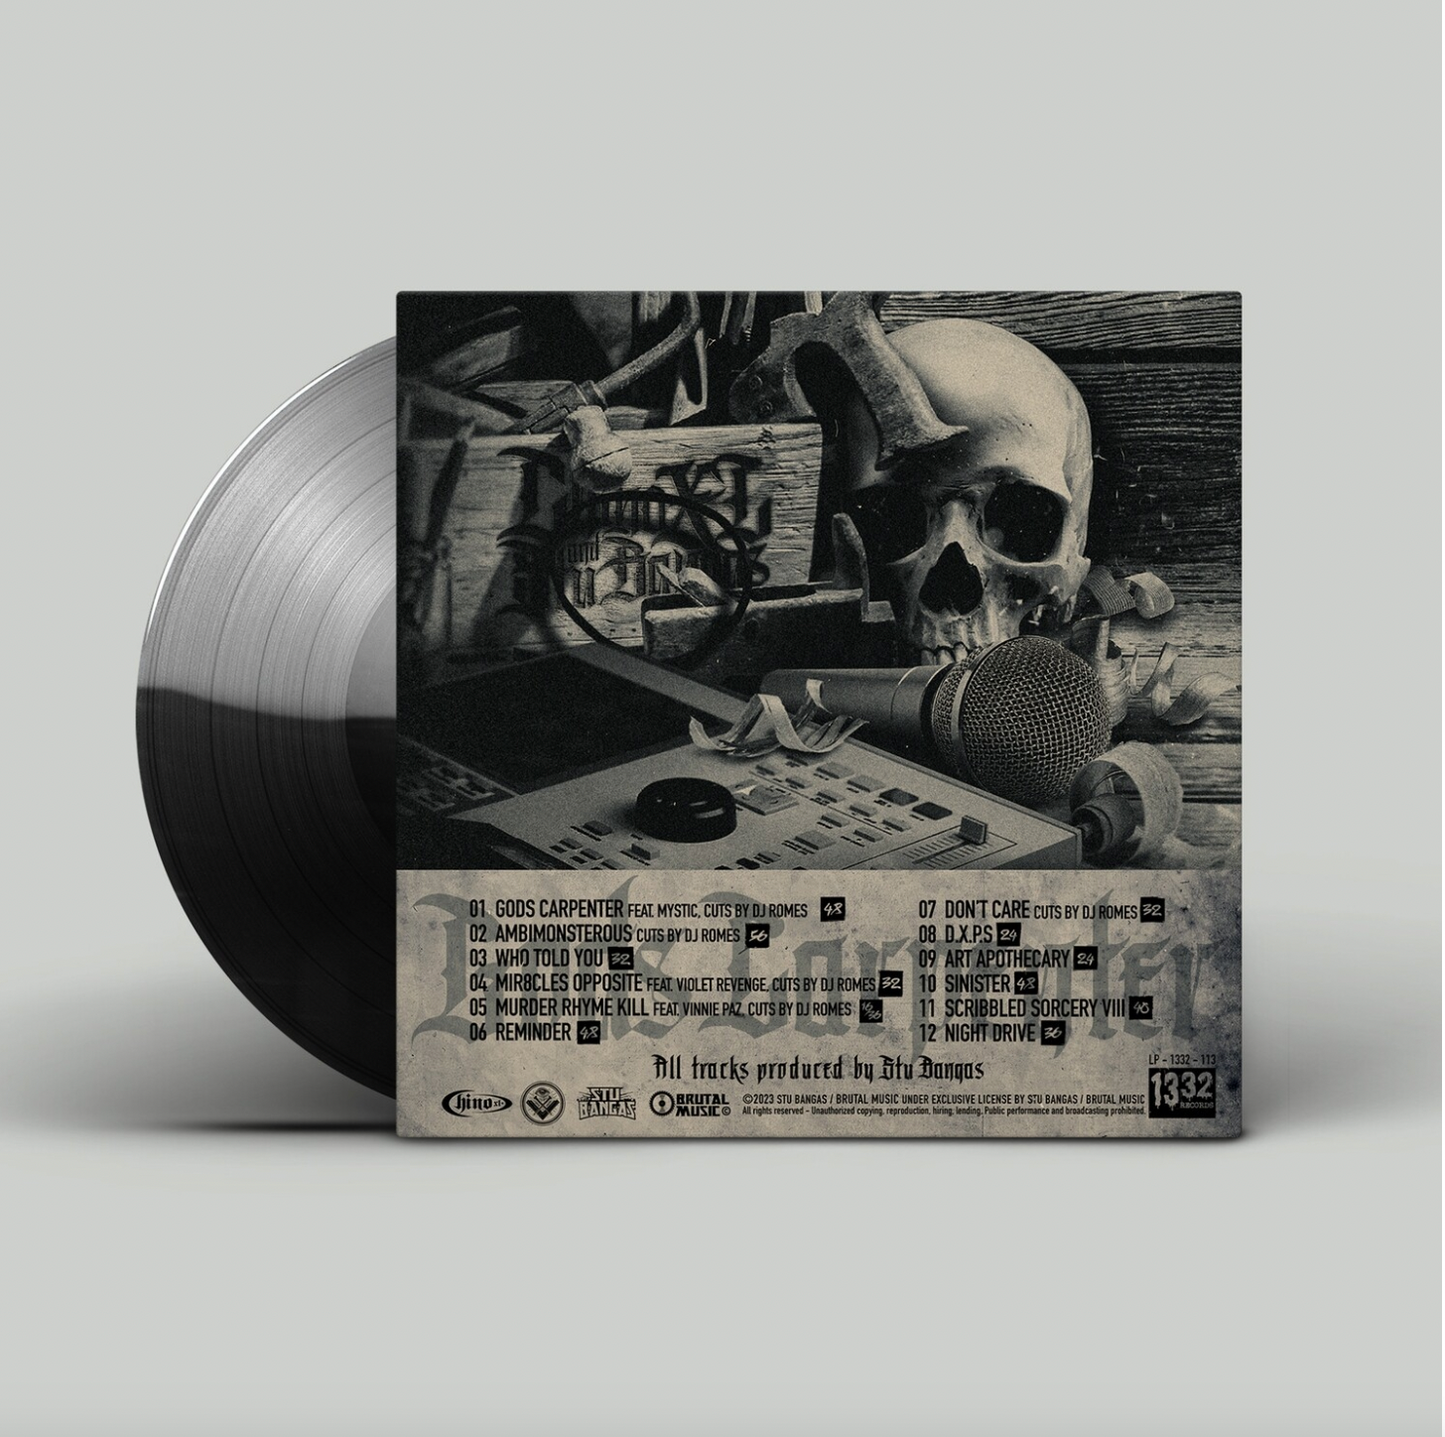 Chino XL & Stu Bangas - Gods Carpenter Vinyl Autographed